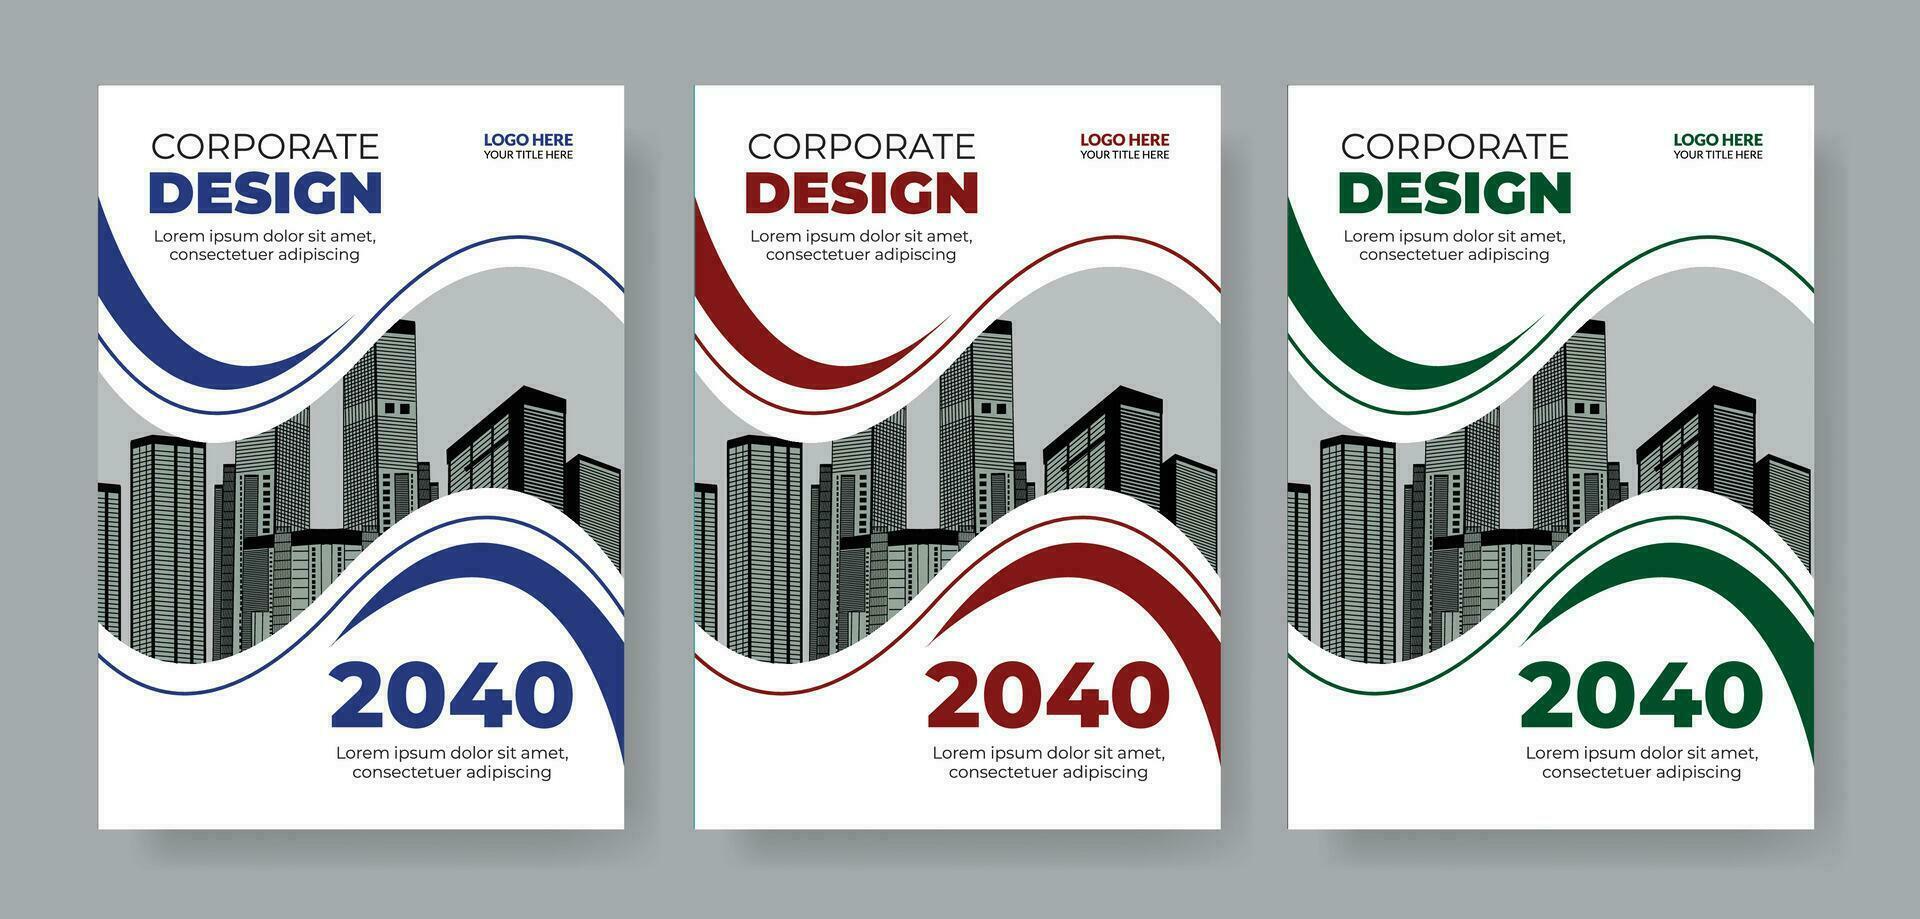 Corporate Cover Design Template in A4, annual report, poster, Corporate Presentation, business cover design, magazine cover vector